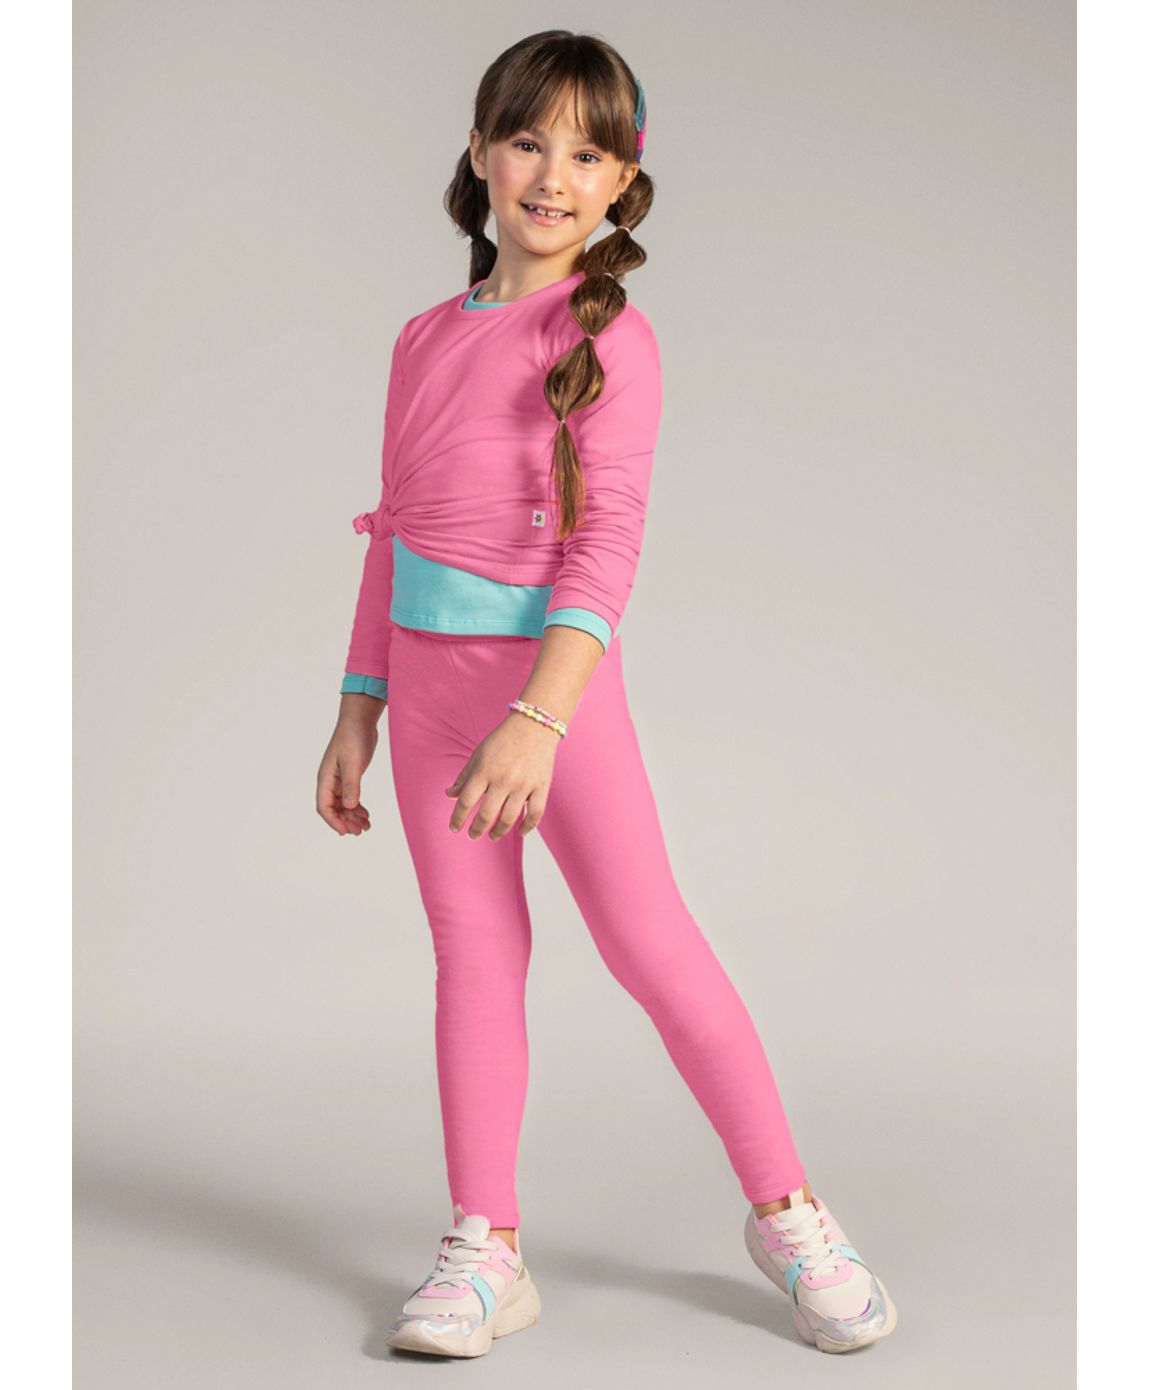 Calça legging infantil menina em cotton Brandili - Brandili